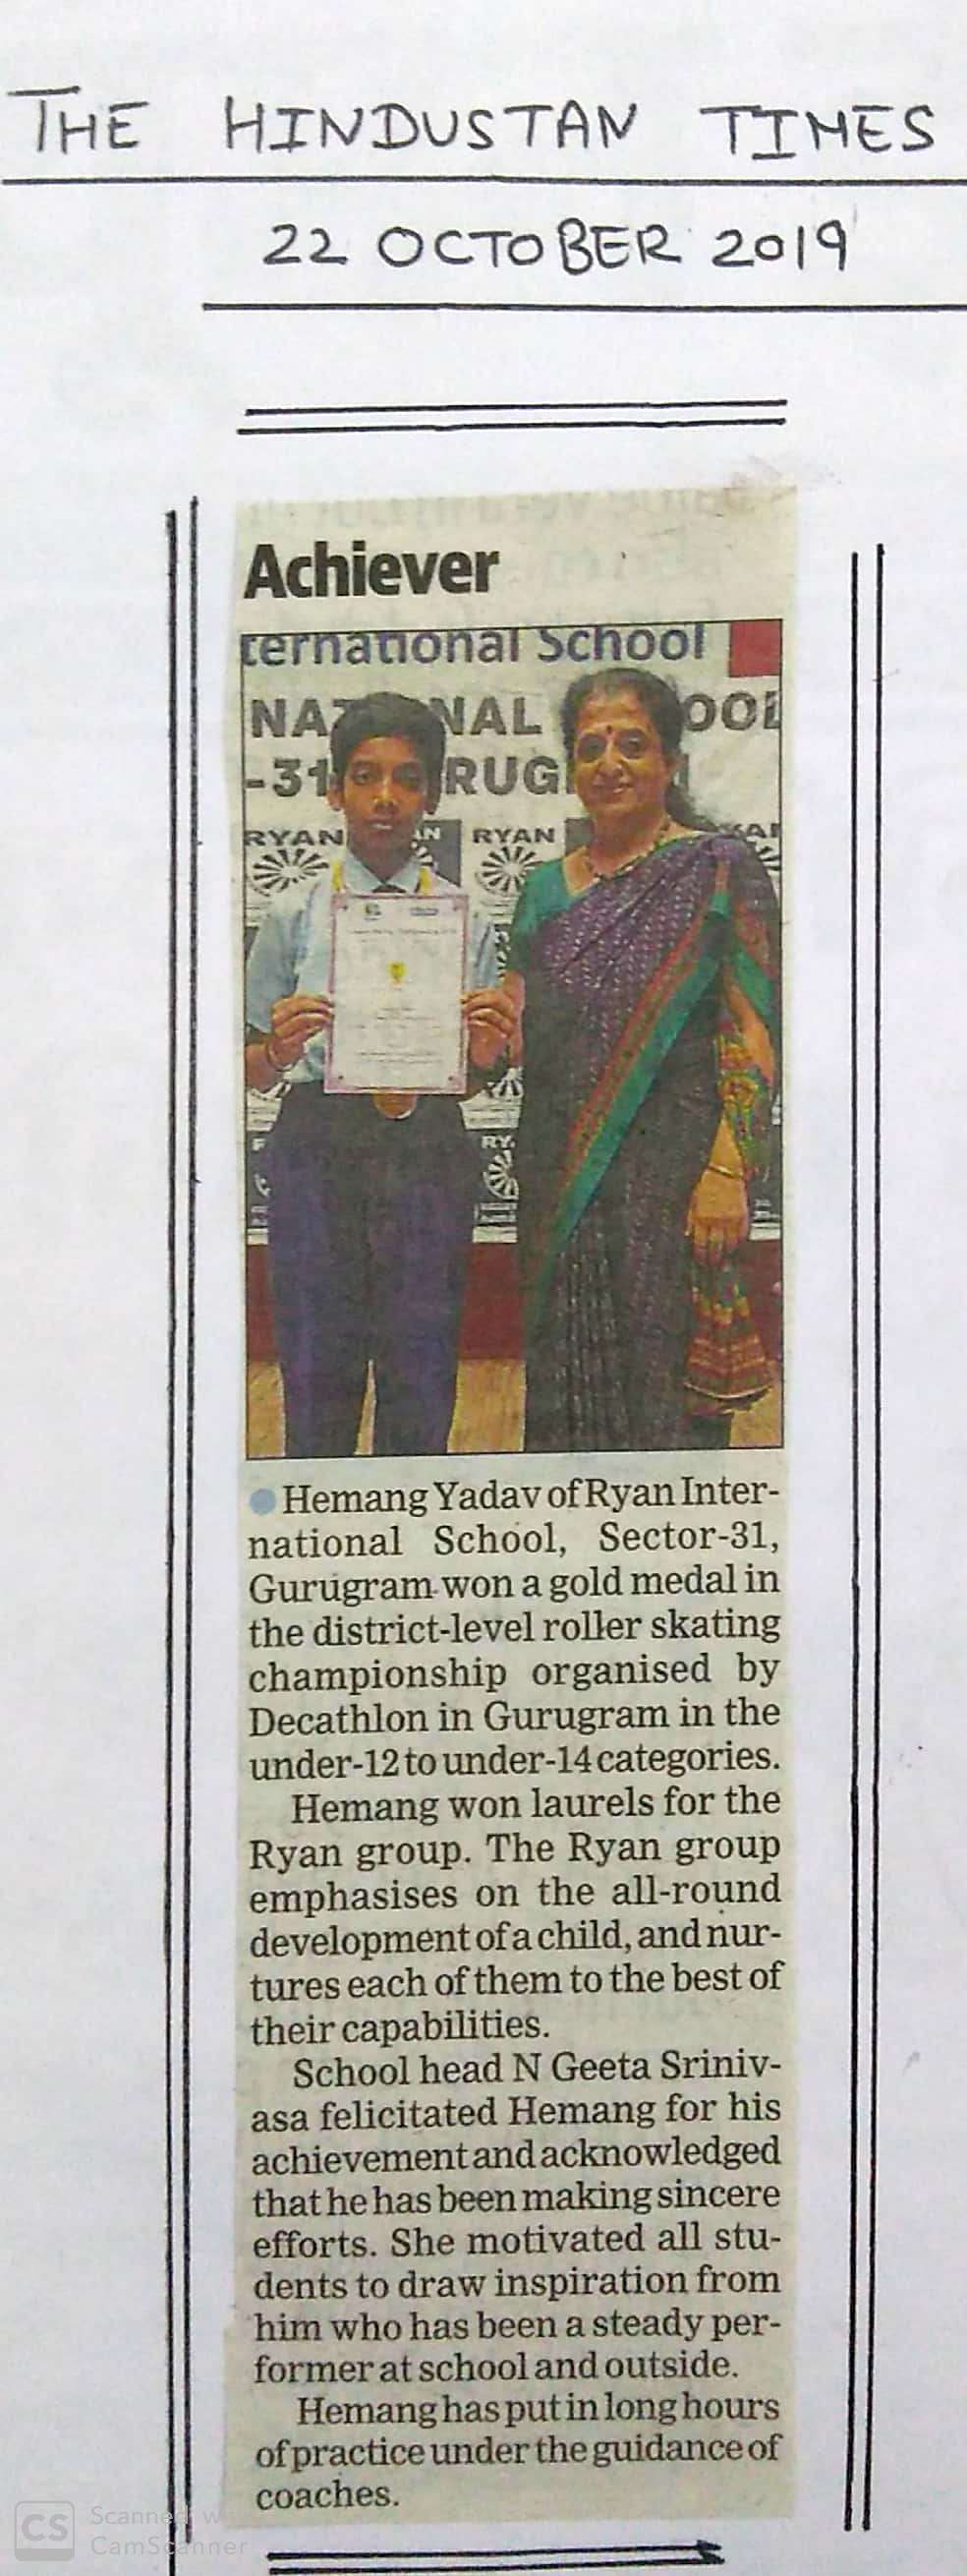 Hemang Yadav of Ryan International School Gurgaon Sector 31 bag a gold medal in the district level roller skating championship - Ryan International School, Sec 31 Gurgaon